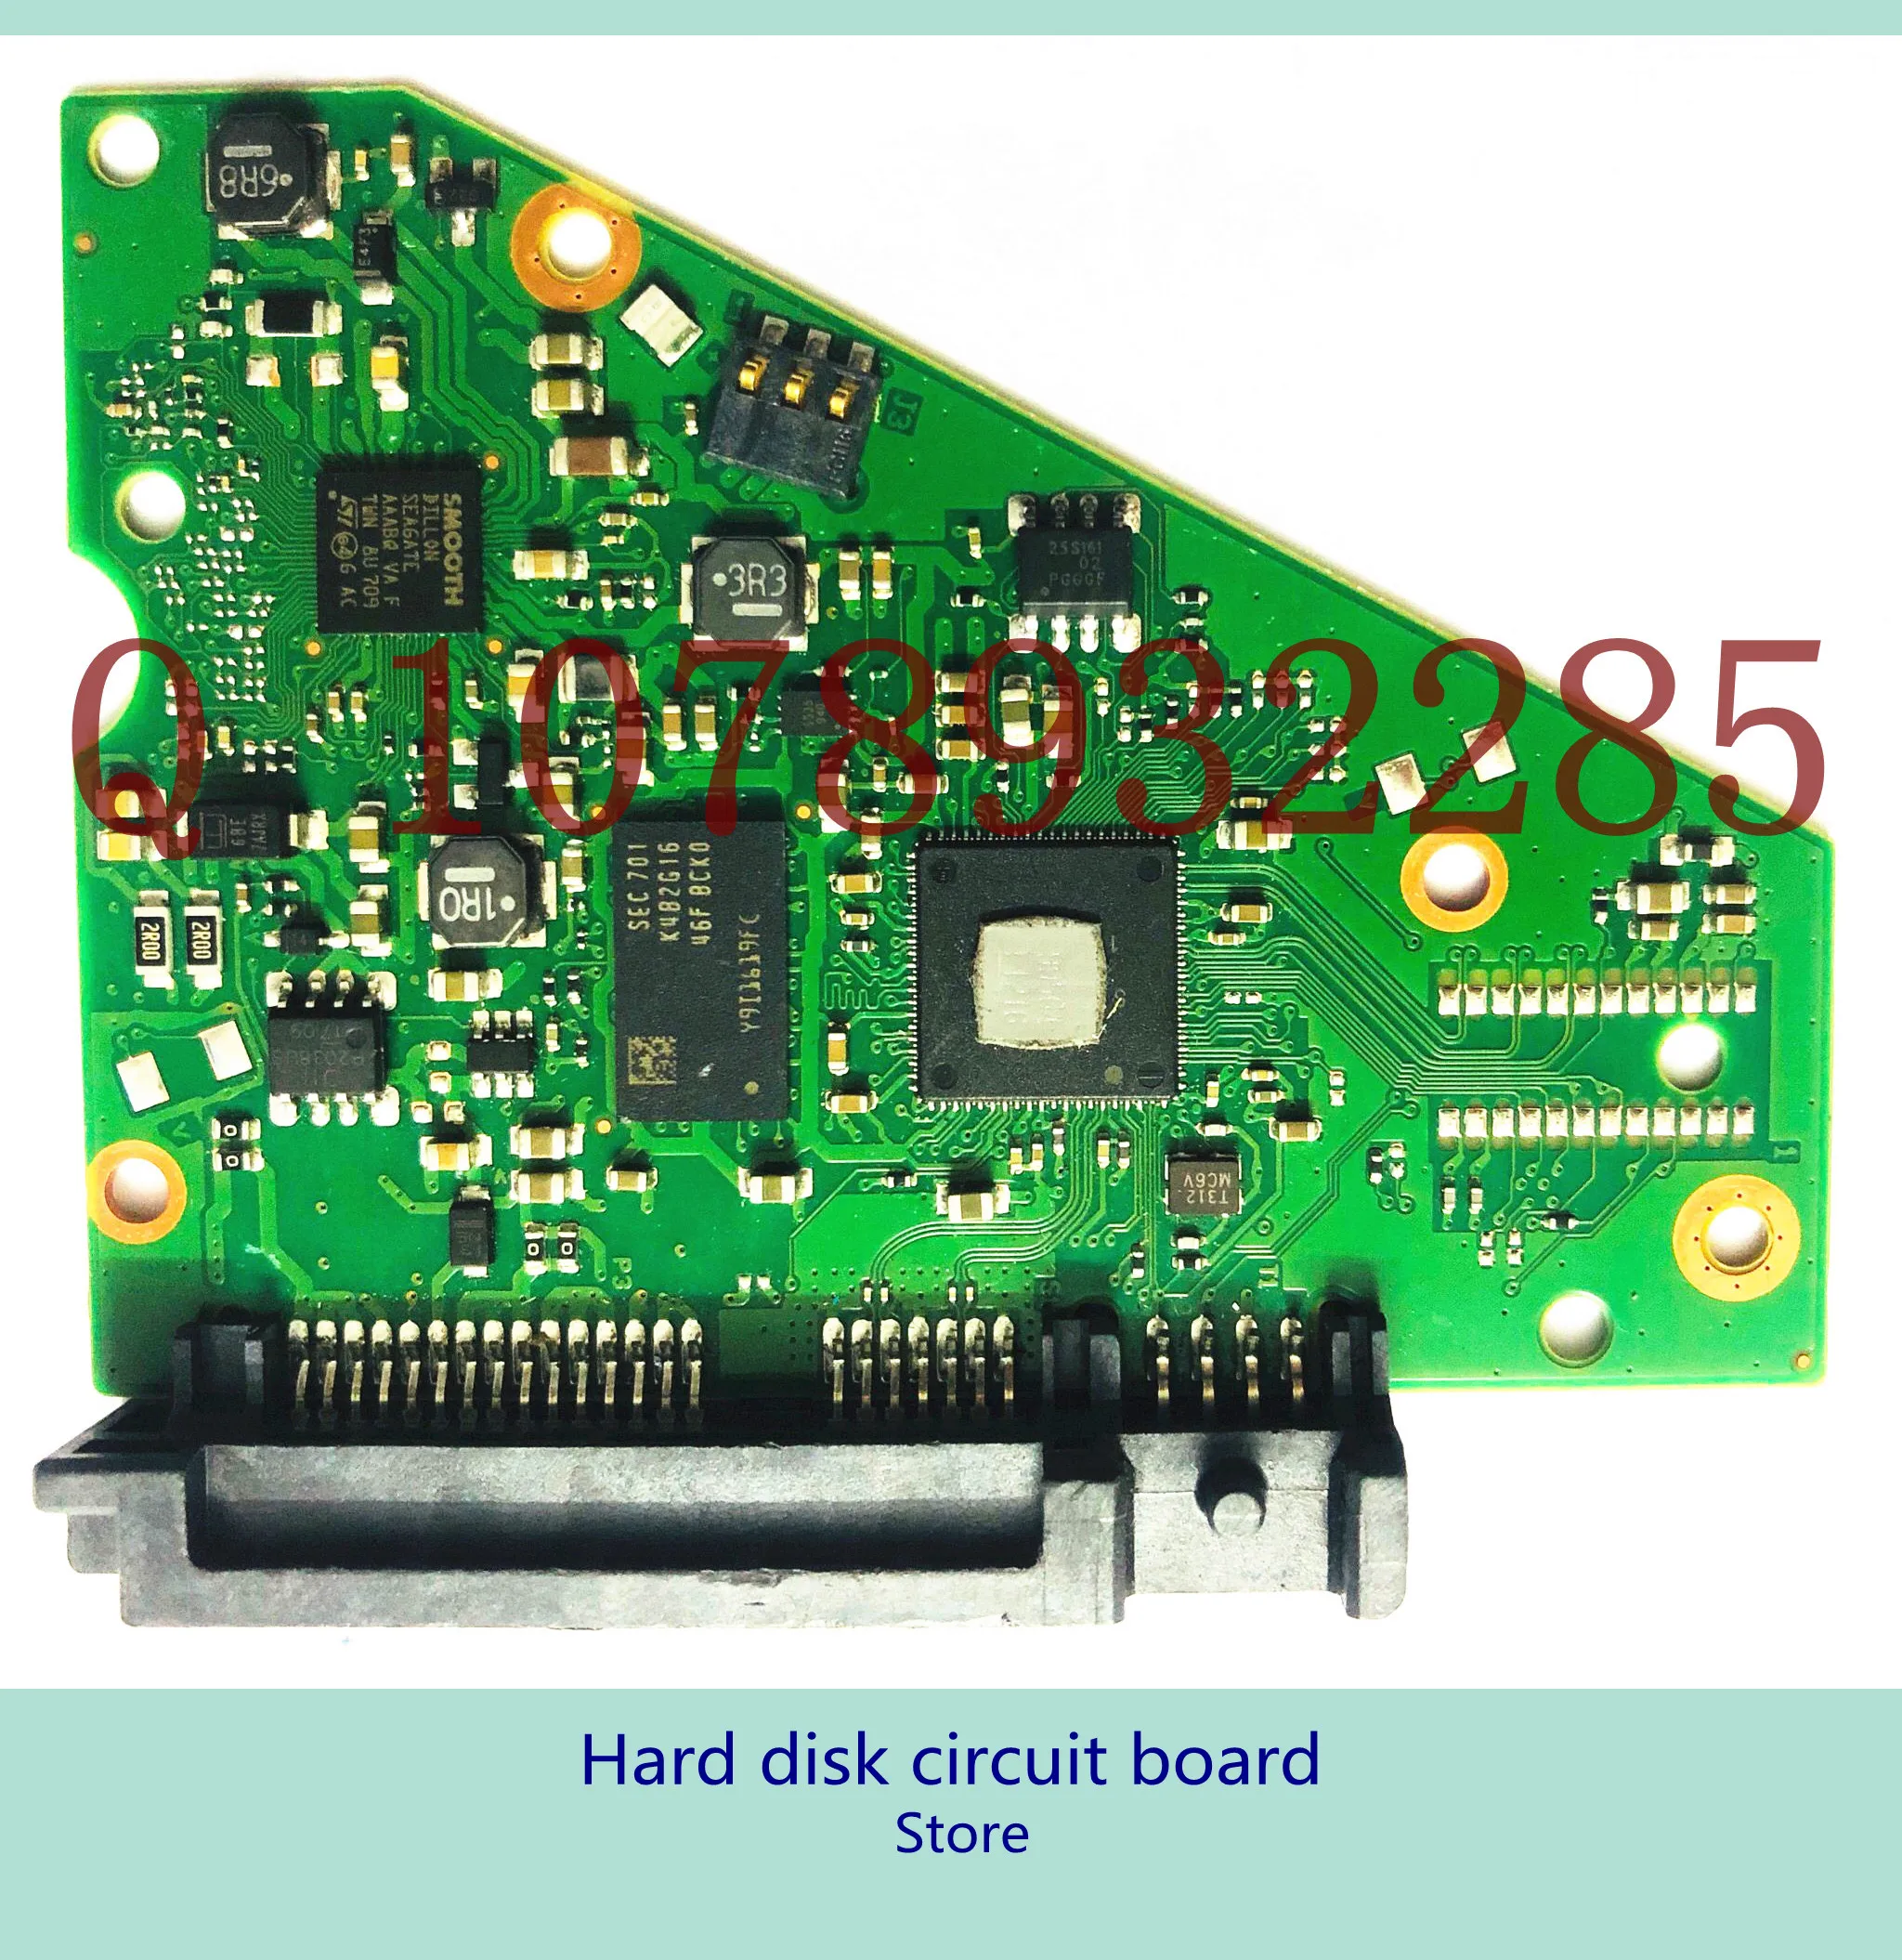 

100802503 REV A Seagate hard drive parts PCB logic board printed circuit board / 2504 G for Seagate 3.5 SATA hdd data recovery